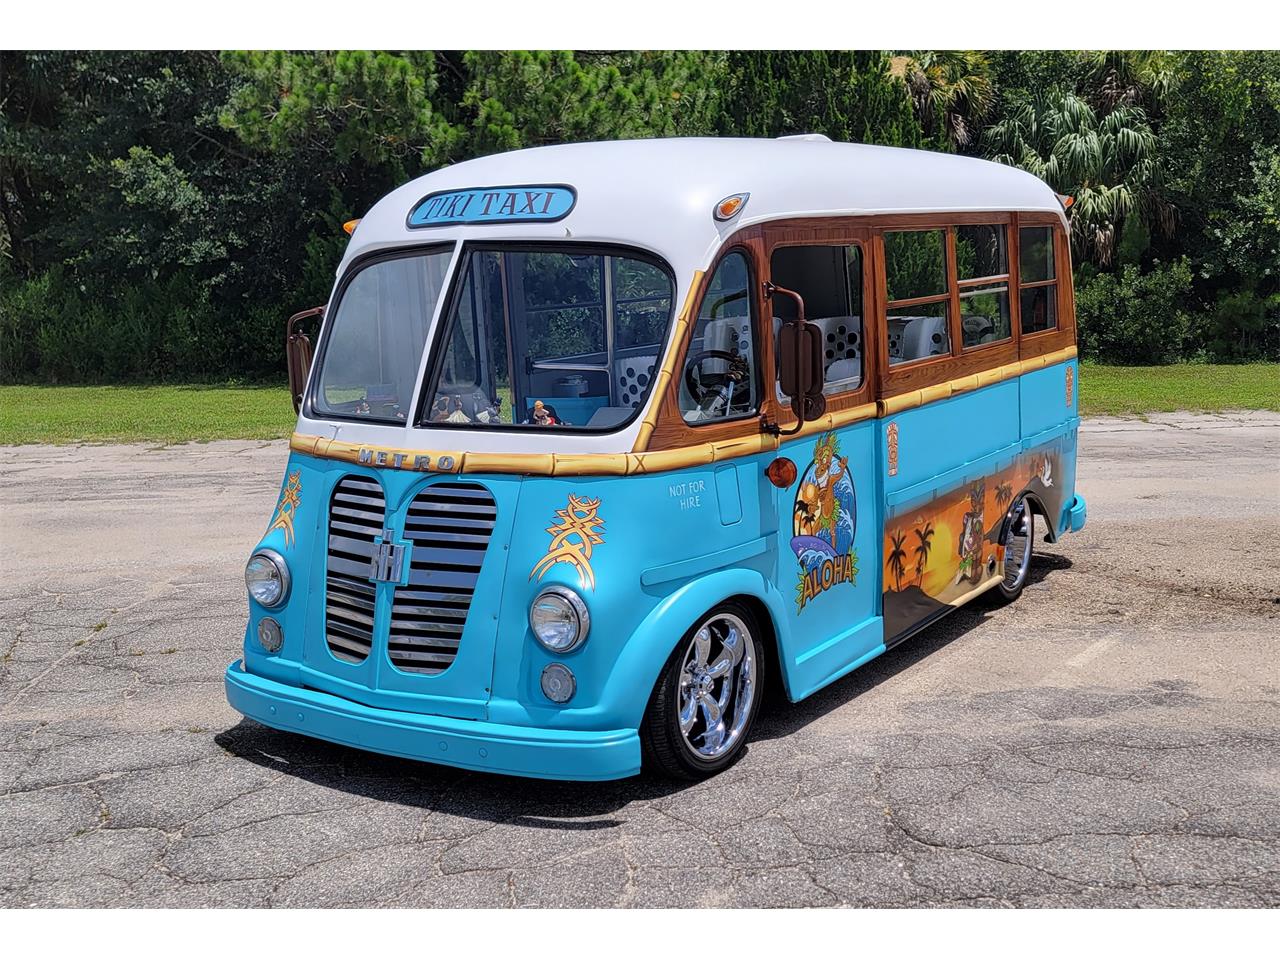 1961 International Bus in ormond beach, Florida